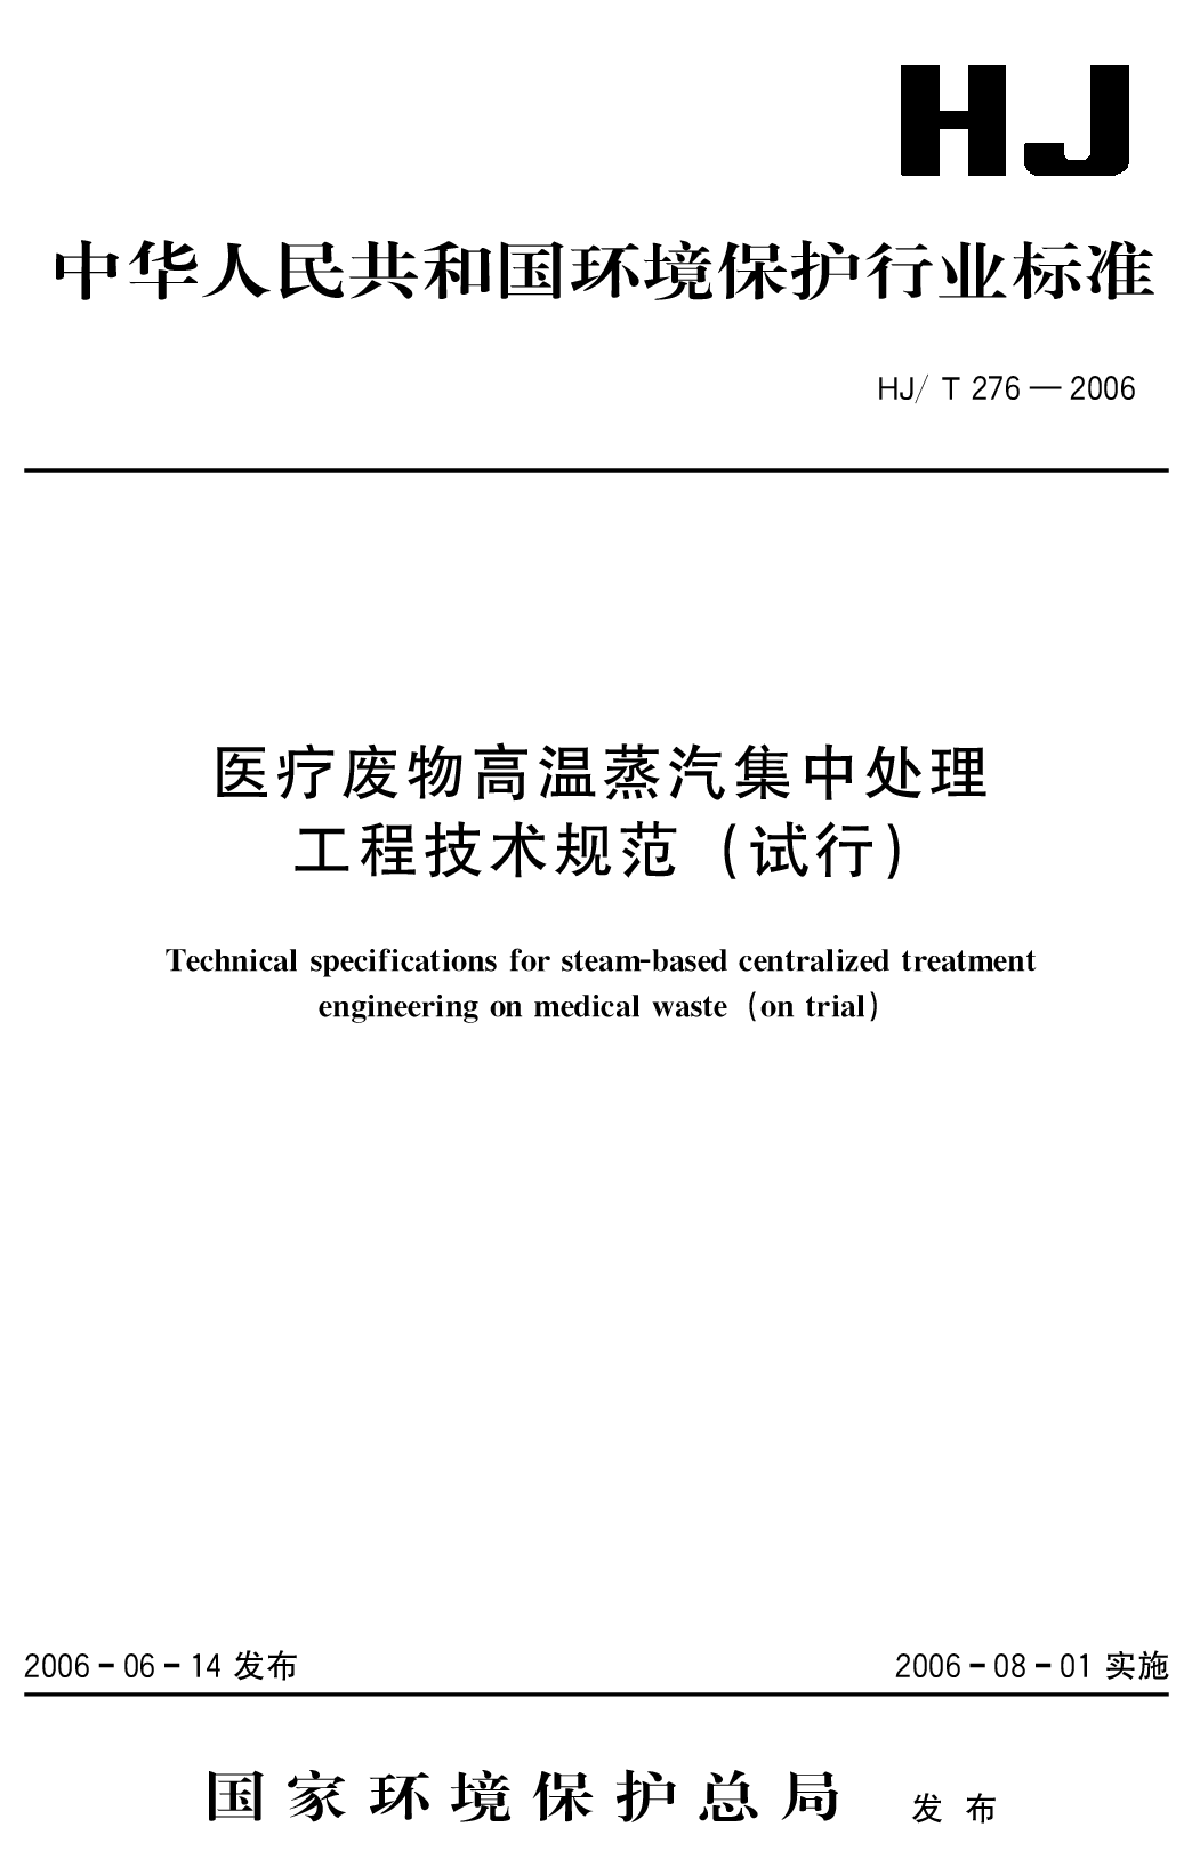 HJ_T 276-2006 医疗废物高温蒸汽集中处理工程技术规范（试行）